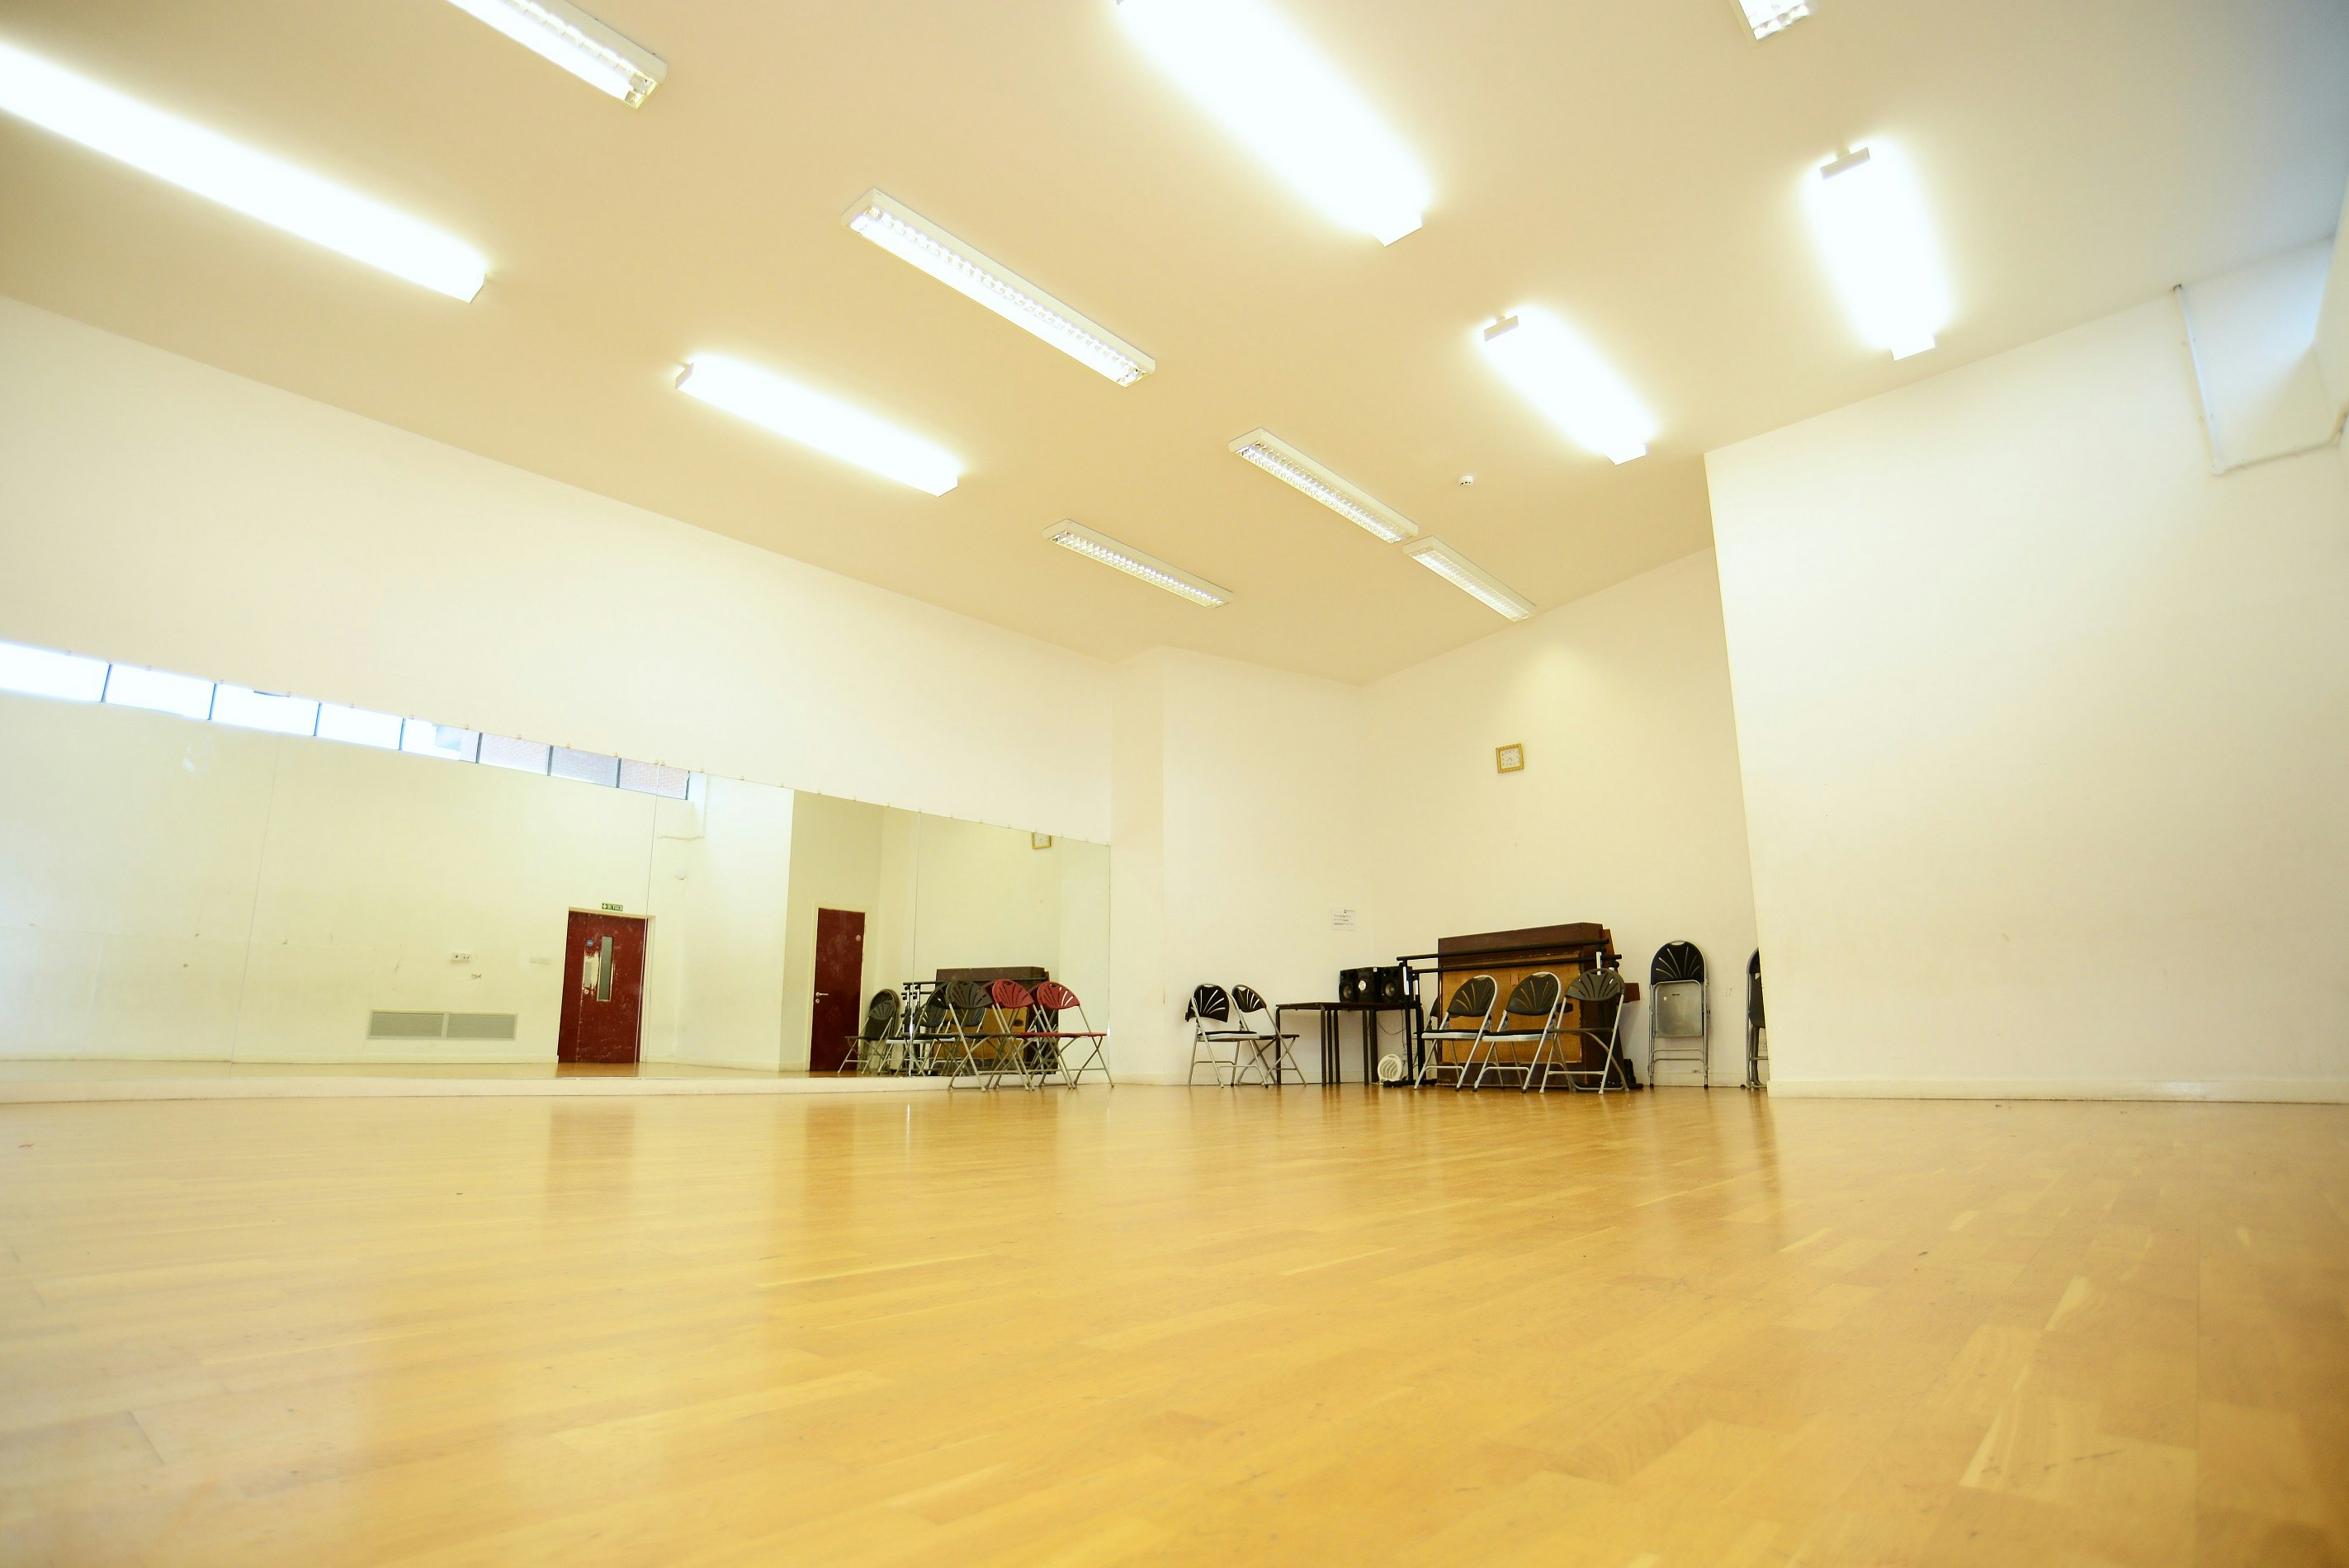 Dance Studio Venues in London - Oxford House